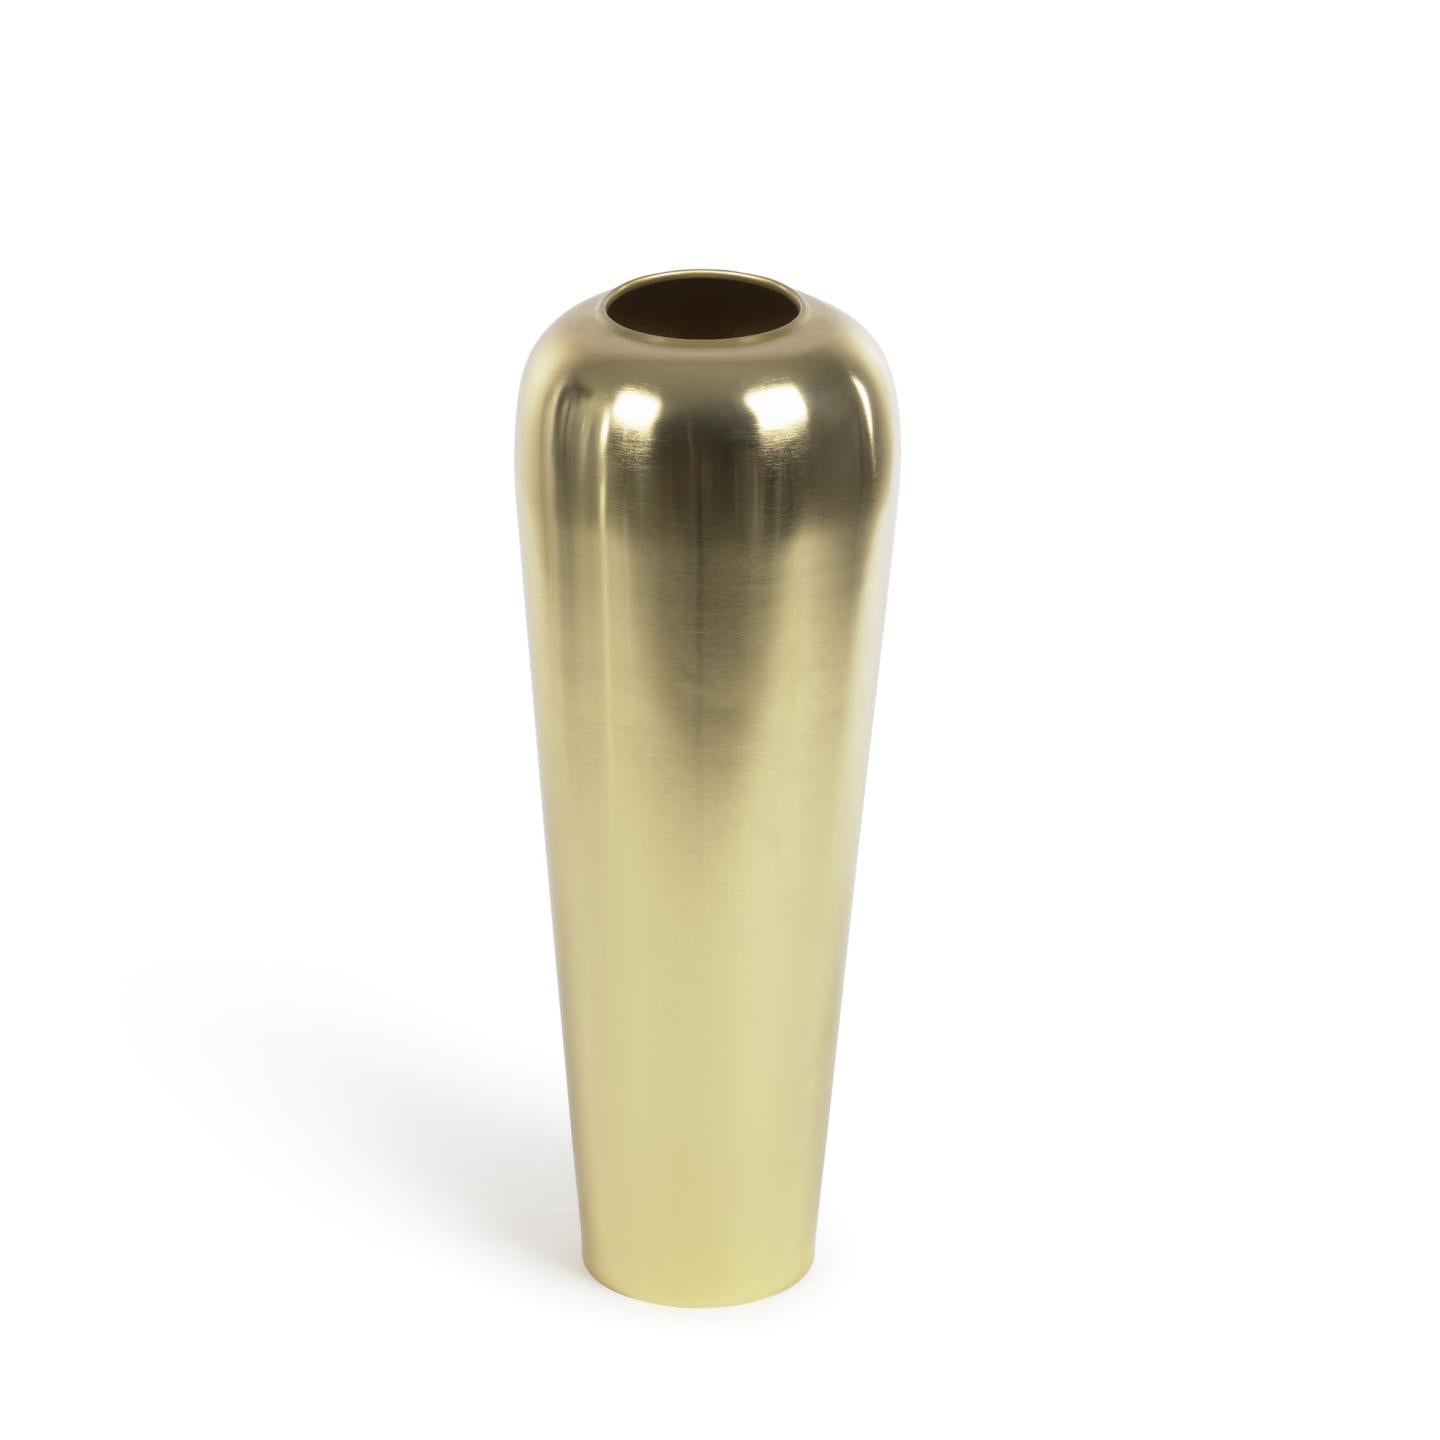 Catherine vase in gold-coloured metal 48 cm